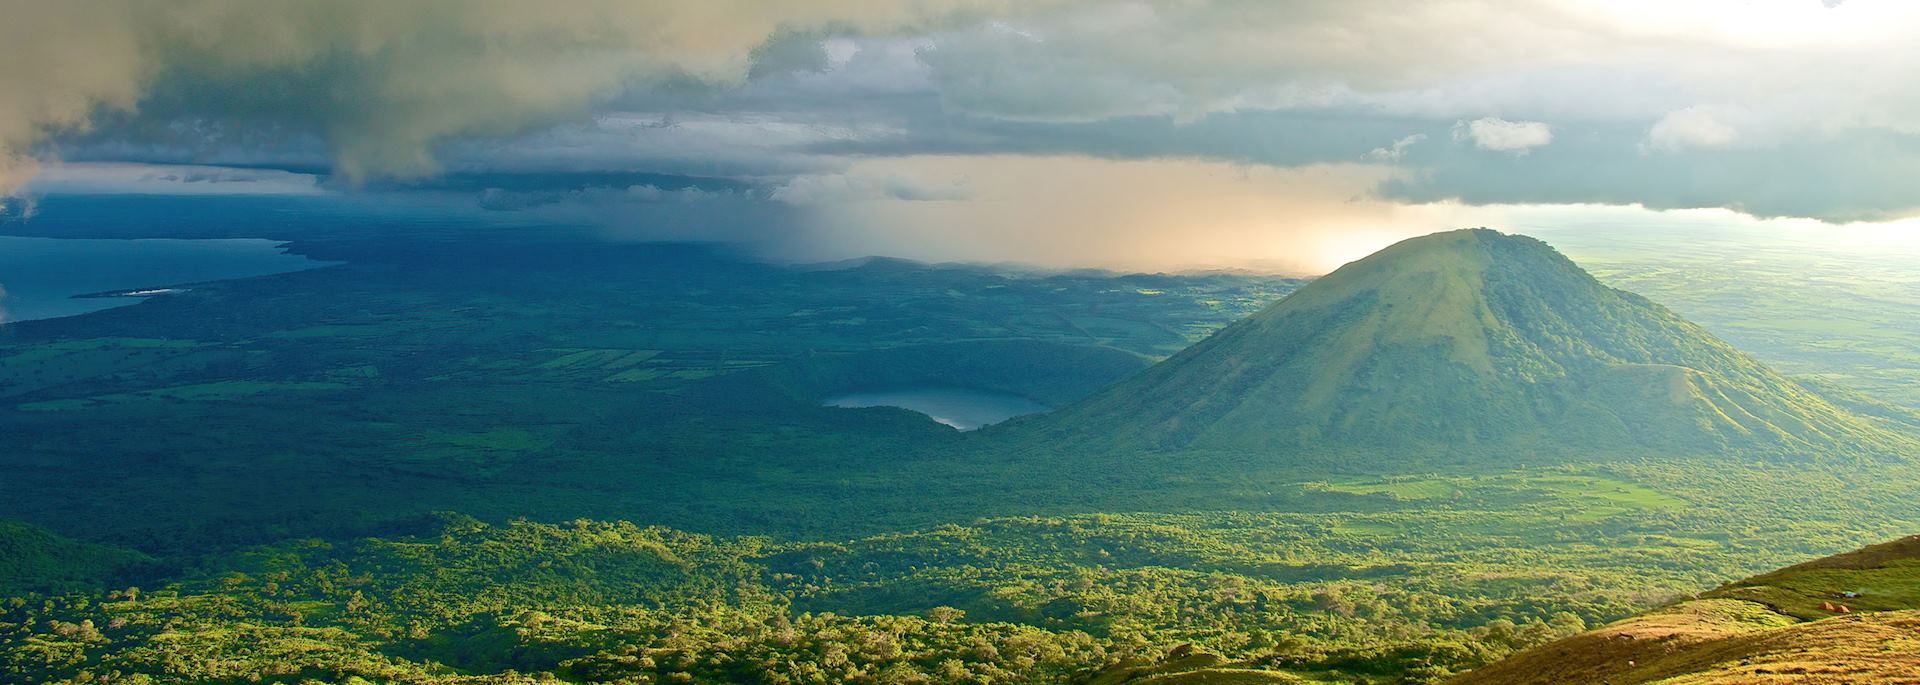 Volcano, Nicaragua